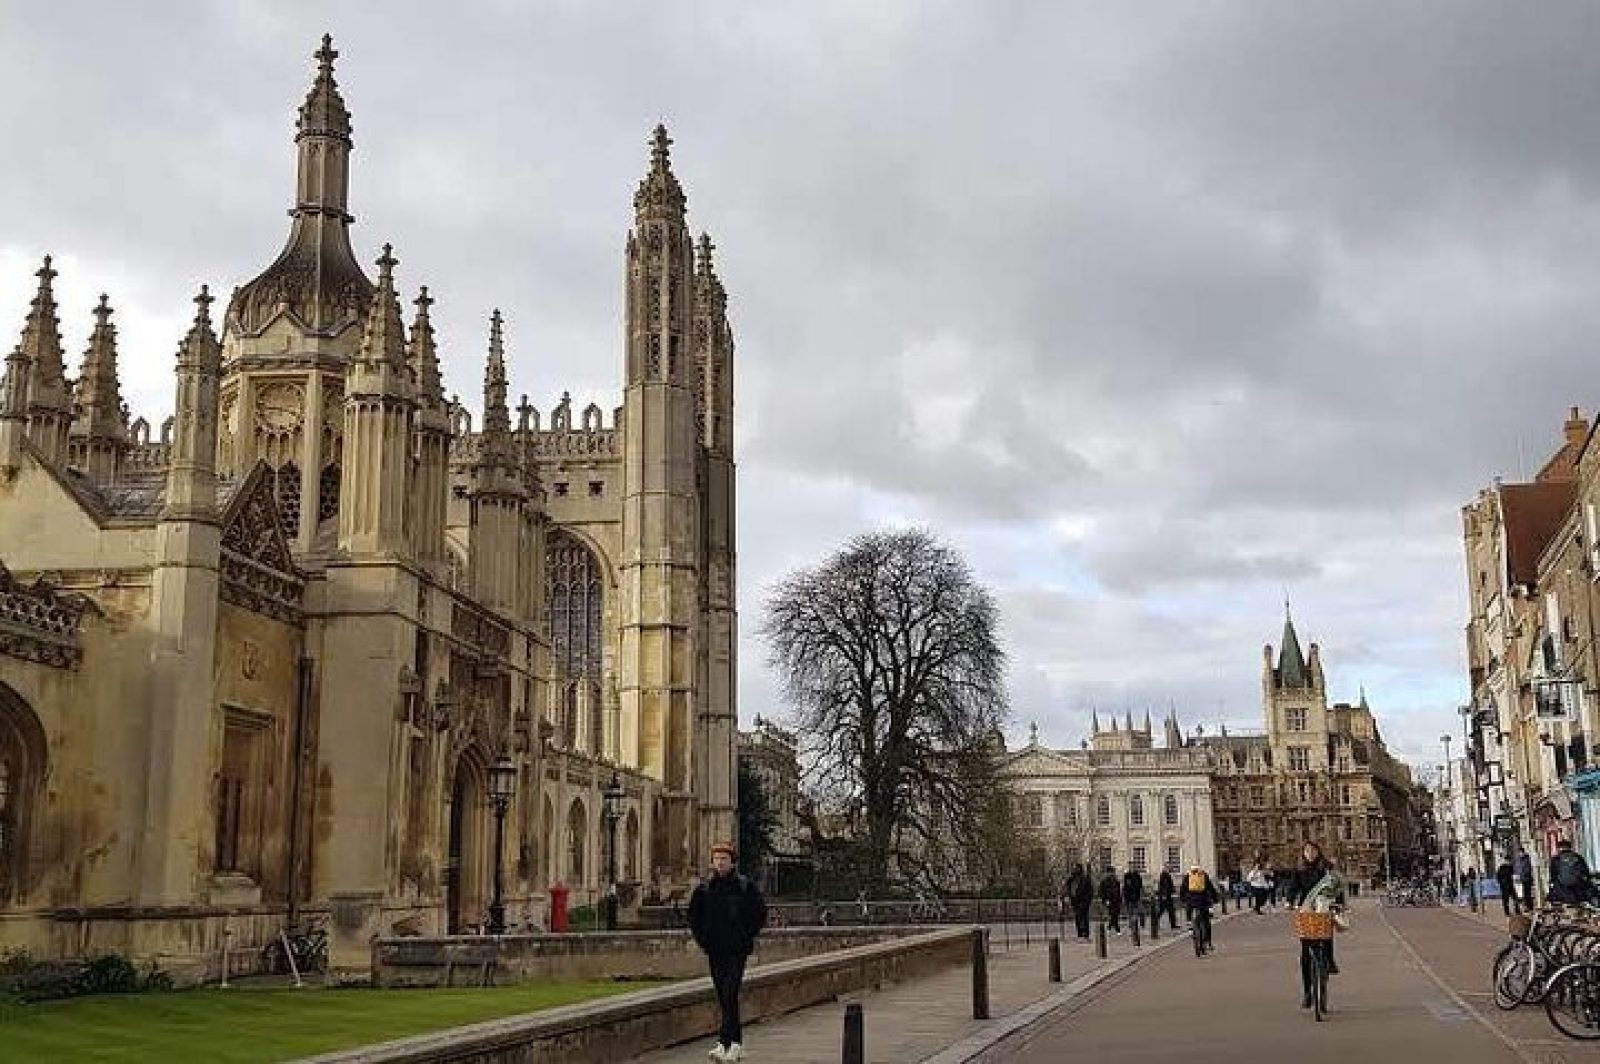 Ideas & inspiration for visiting Cambridge